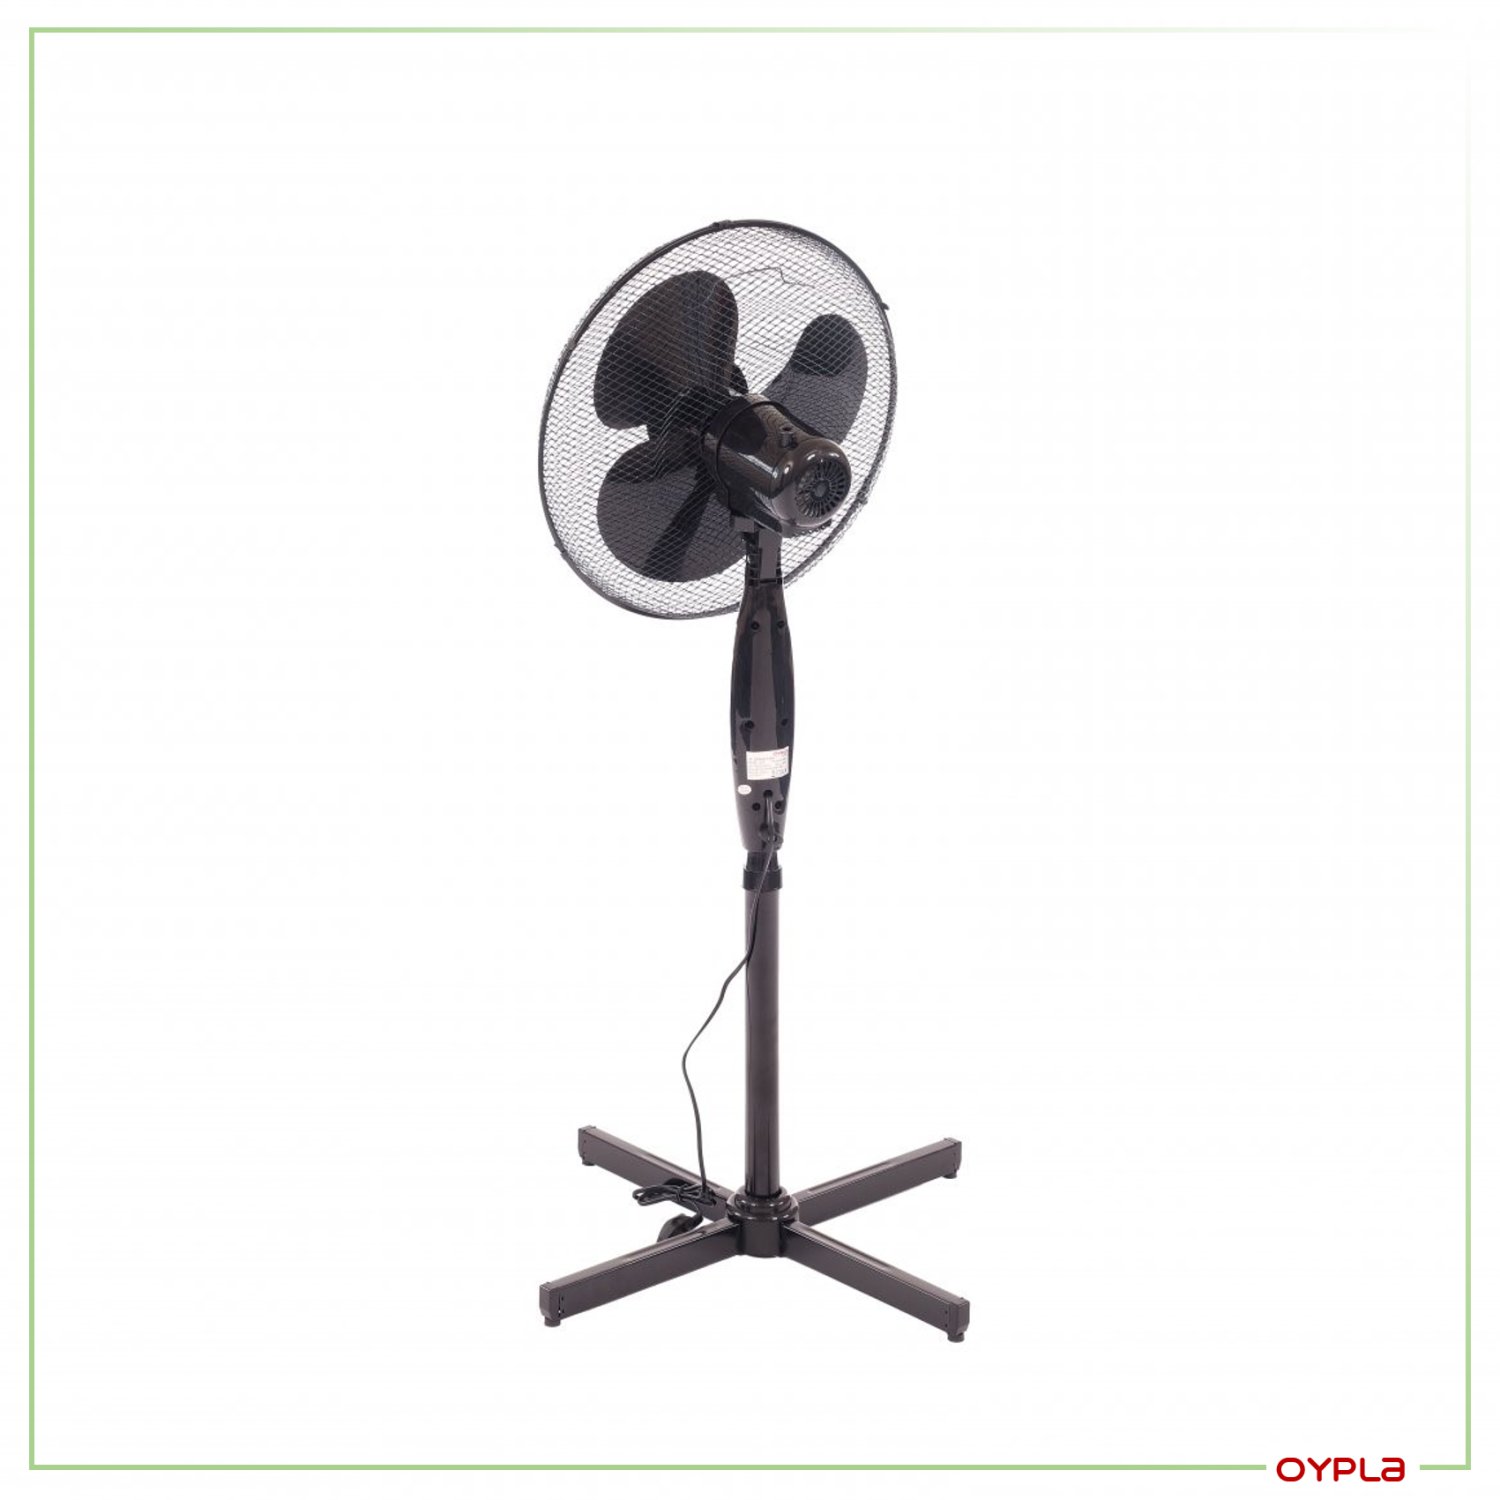 Style-tech TechStyle® 16 Oscillating Extendable Free Standing Tower Pedestal Cooling 3 Speed Fan KUK® 